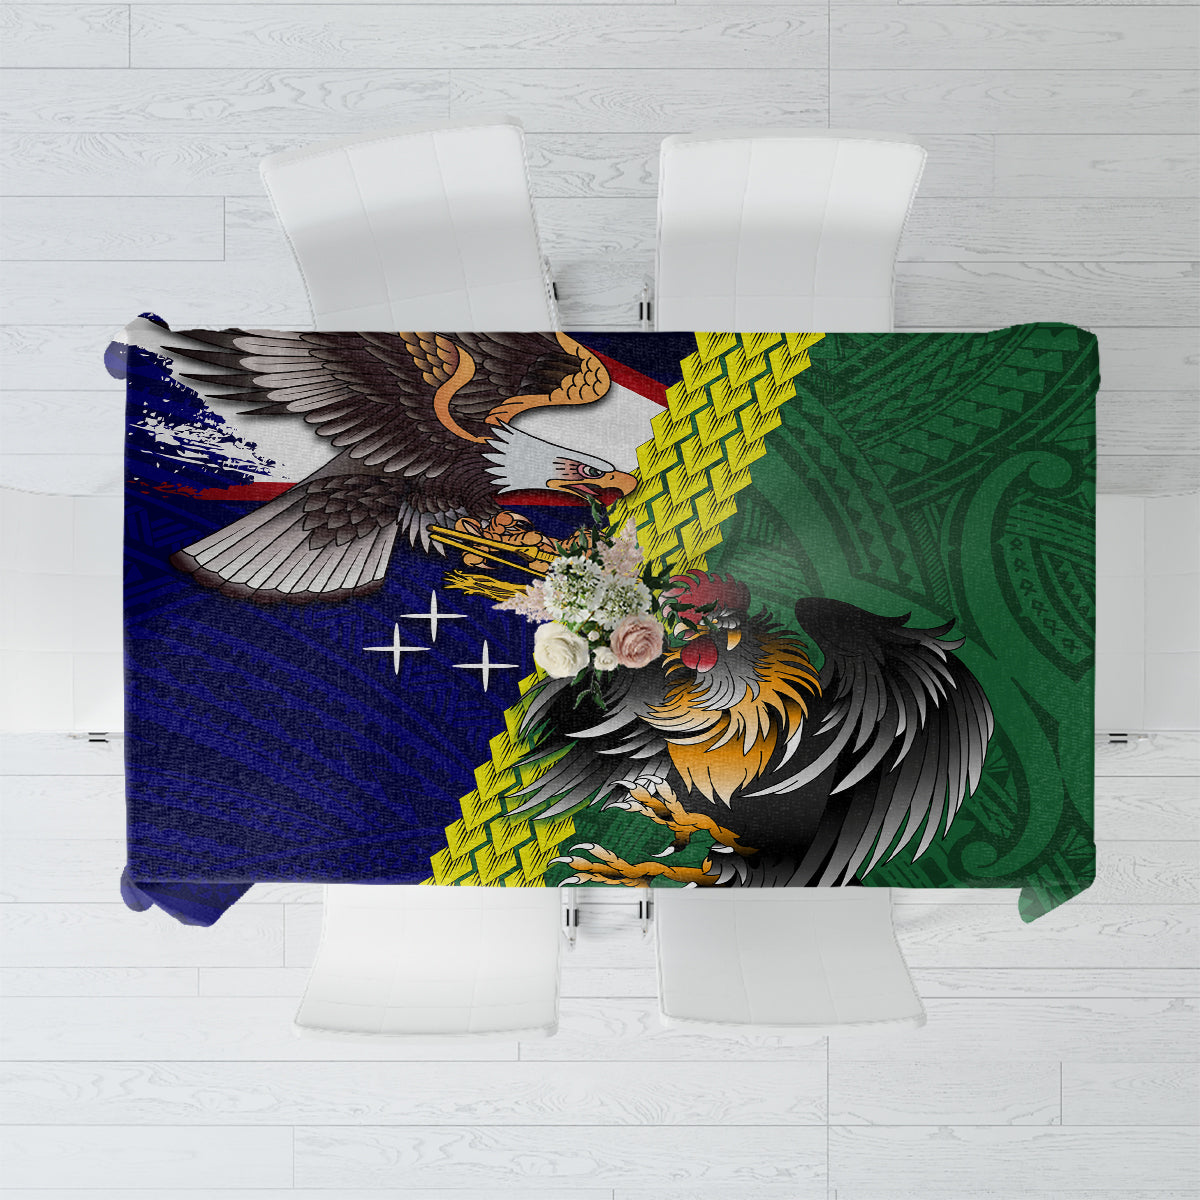 Manu'a Island and American Samoa Tablecloth Rooster and Eagle Mascot